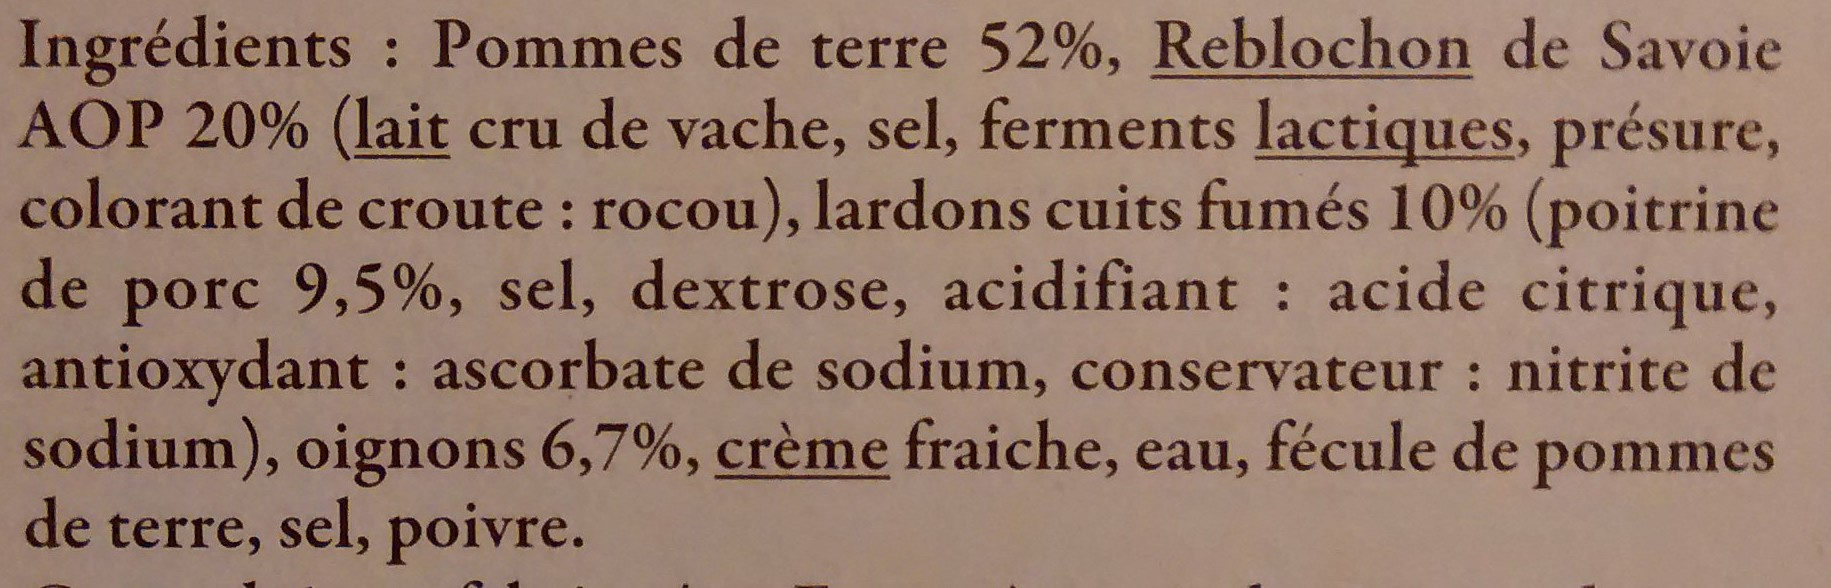 Tartiflette au Reblochon de Savoie Label Rouge - Ingredients - fr